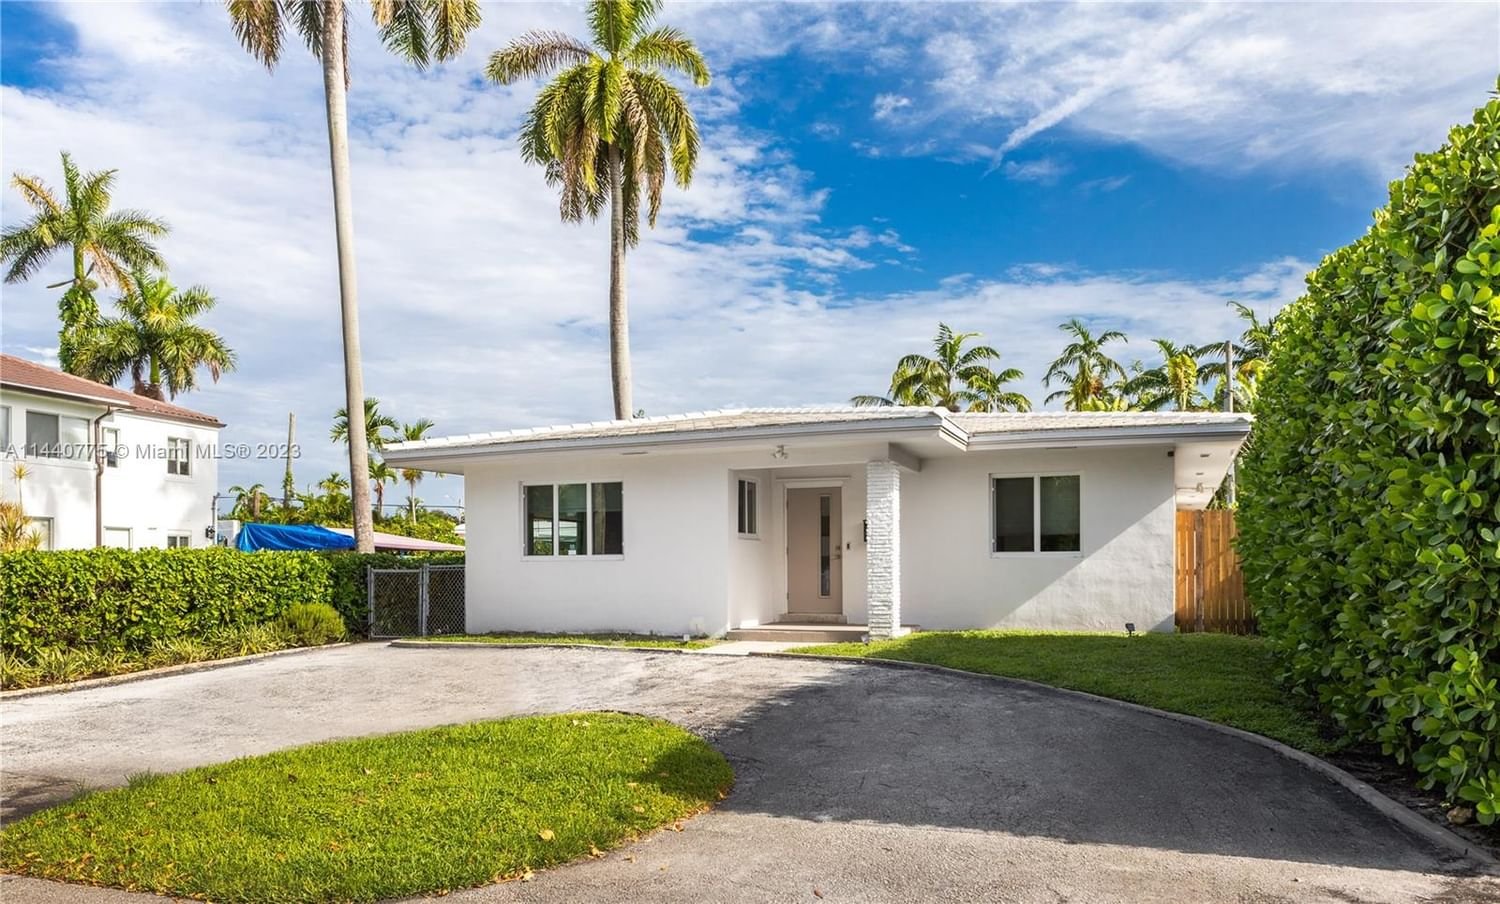 Real estate property located at 1221 85th St, Miami-Dade County, Miami, FL